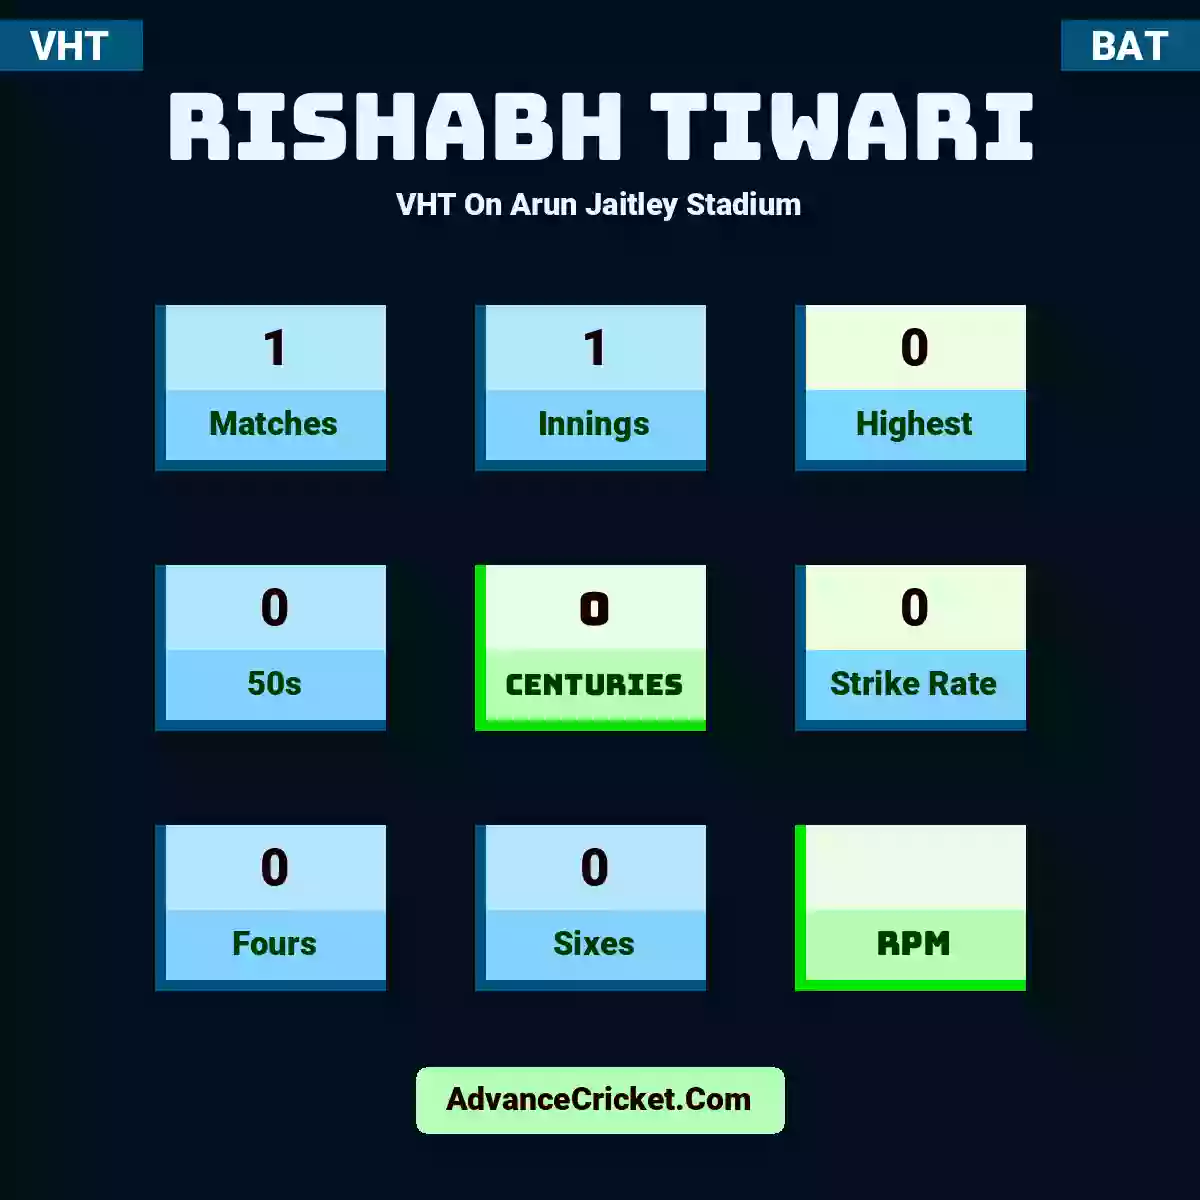 Rishabh Tiwari VHT  On Arun Jaitley Stadium, Rishabh Tiwari played 1 matches, scored 0 runs as highest, 0 half-centuries, and 0 centuries, with a strike rate of 0. R.Tiwari hit 0 fours and 0 sixes.